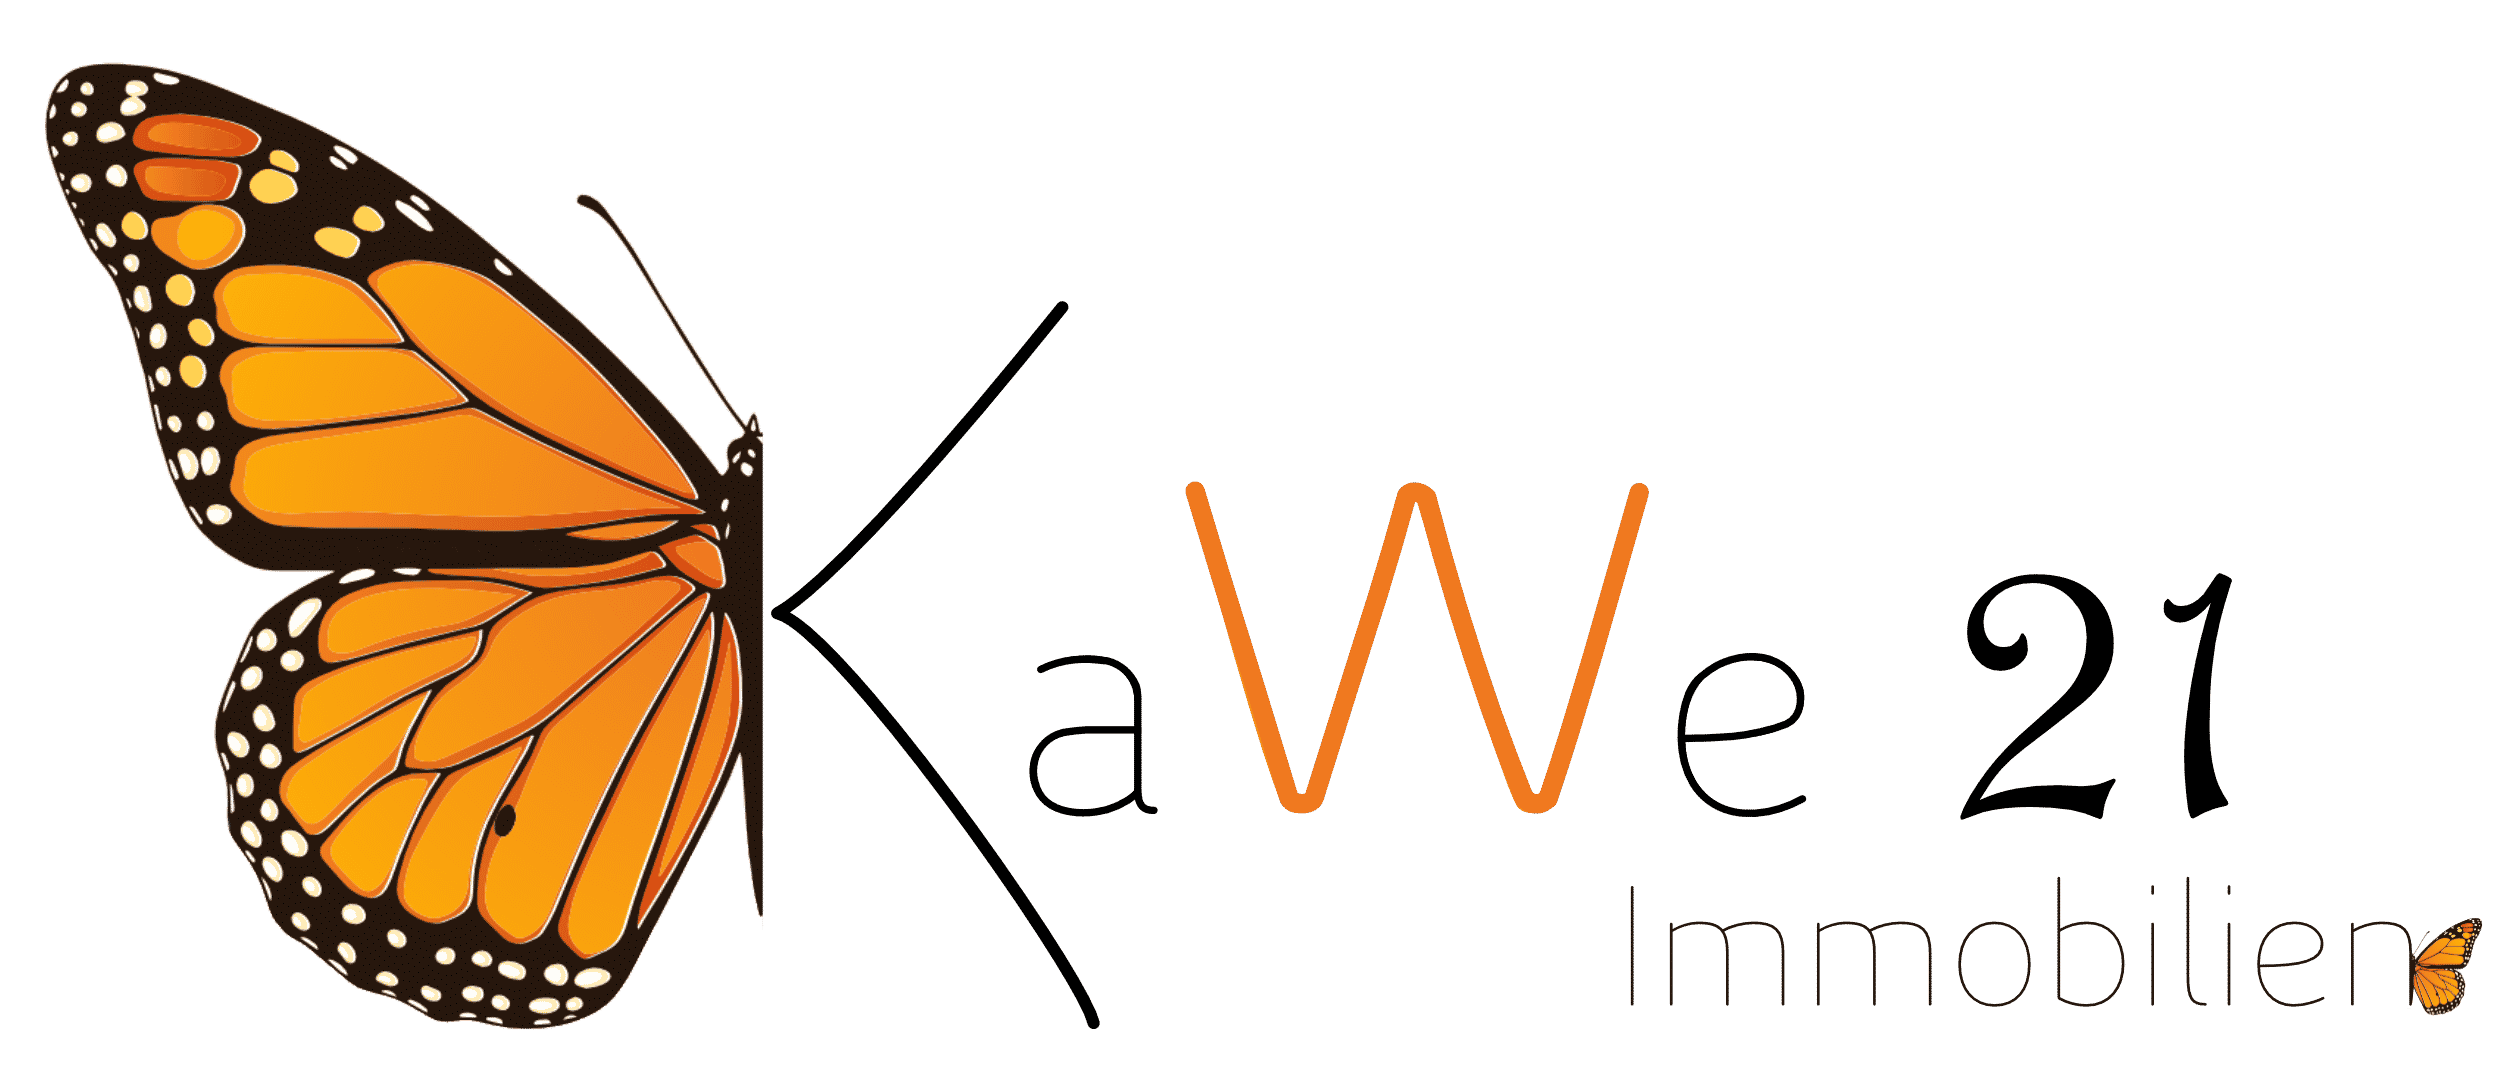 Kawe21-immobilien Logo